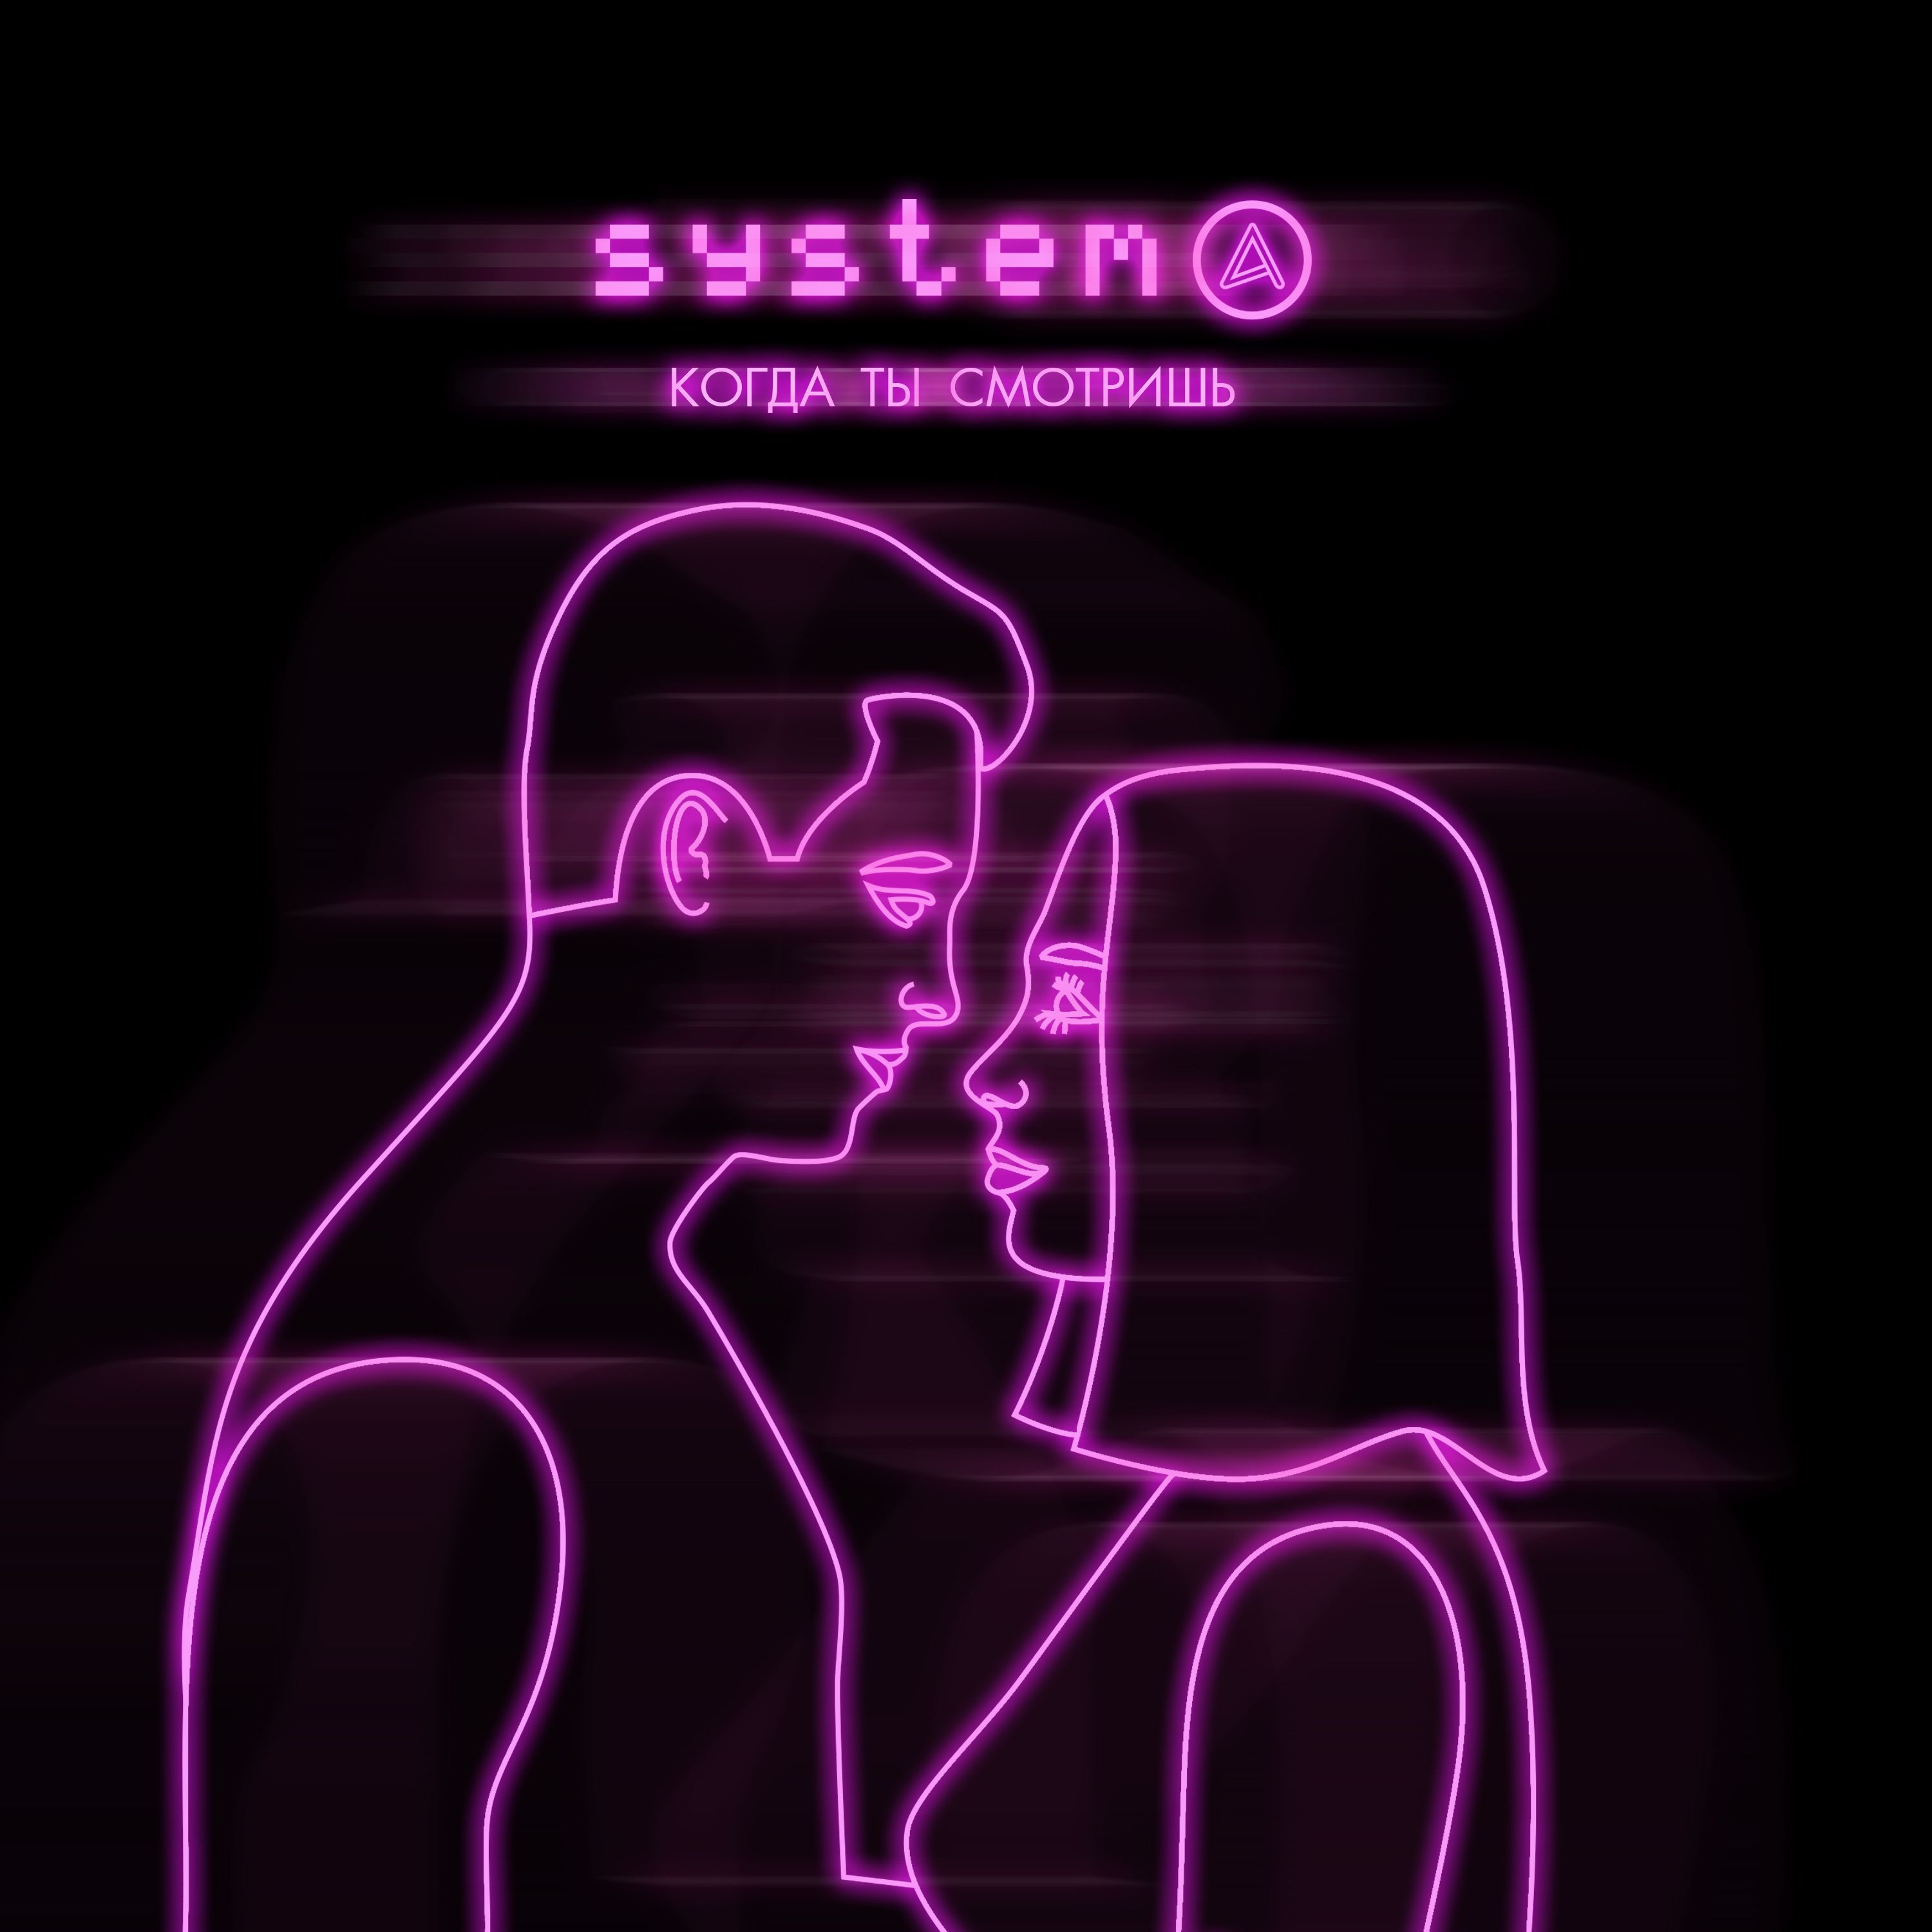 Татаж авах Systema - Когда ты смотришь